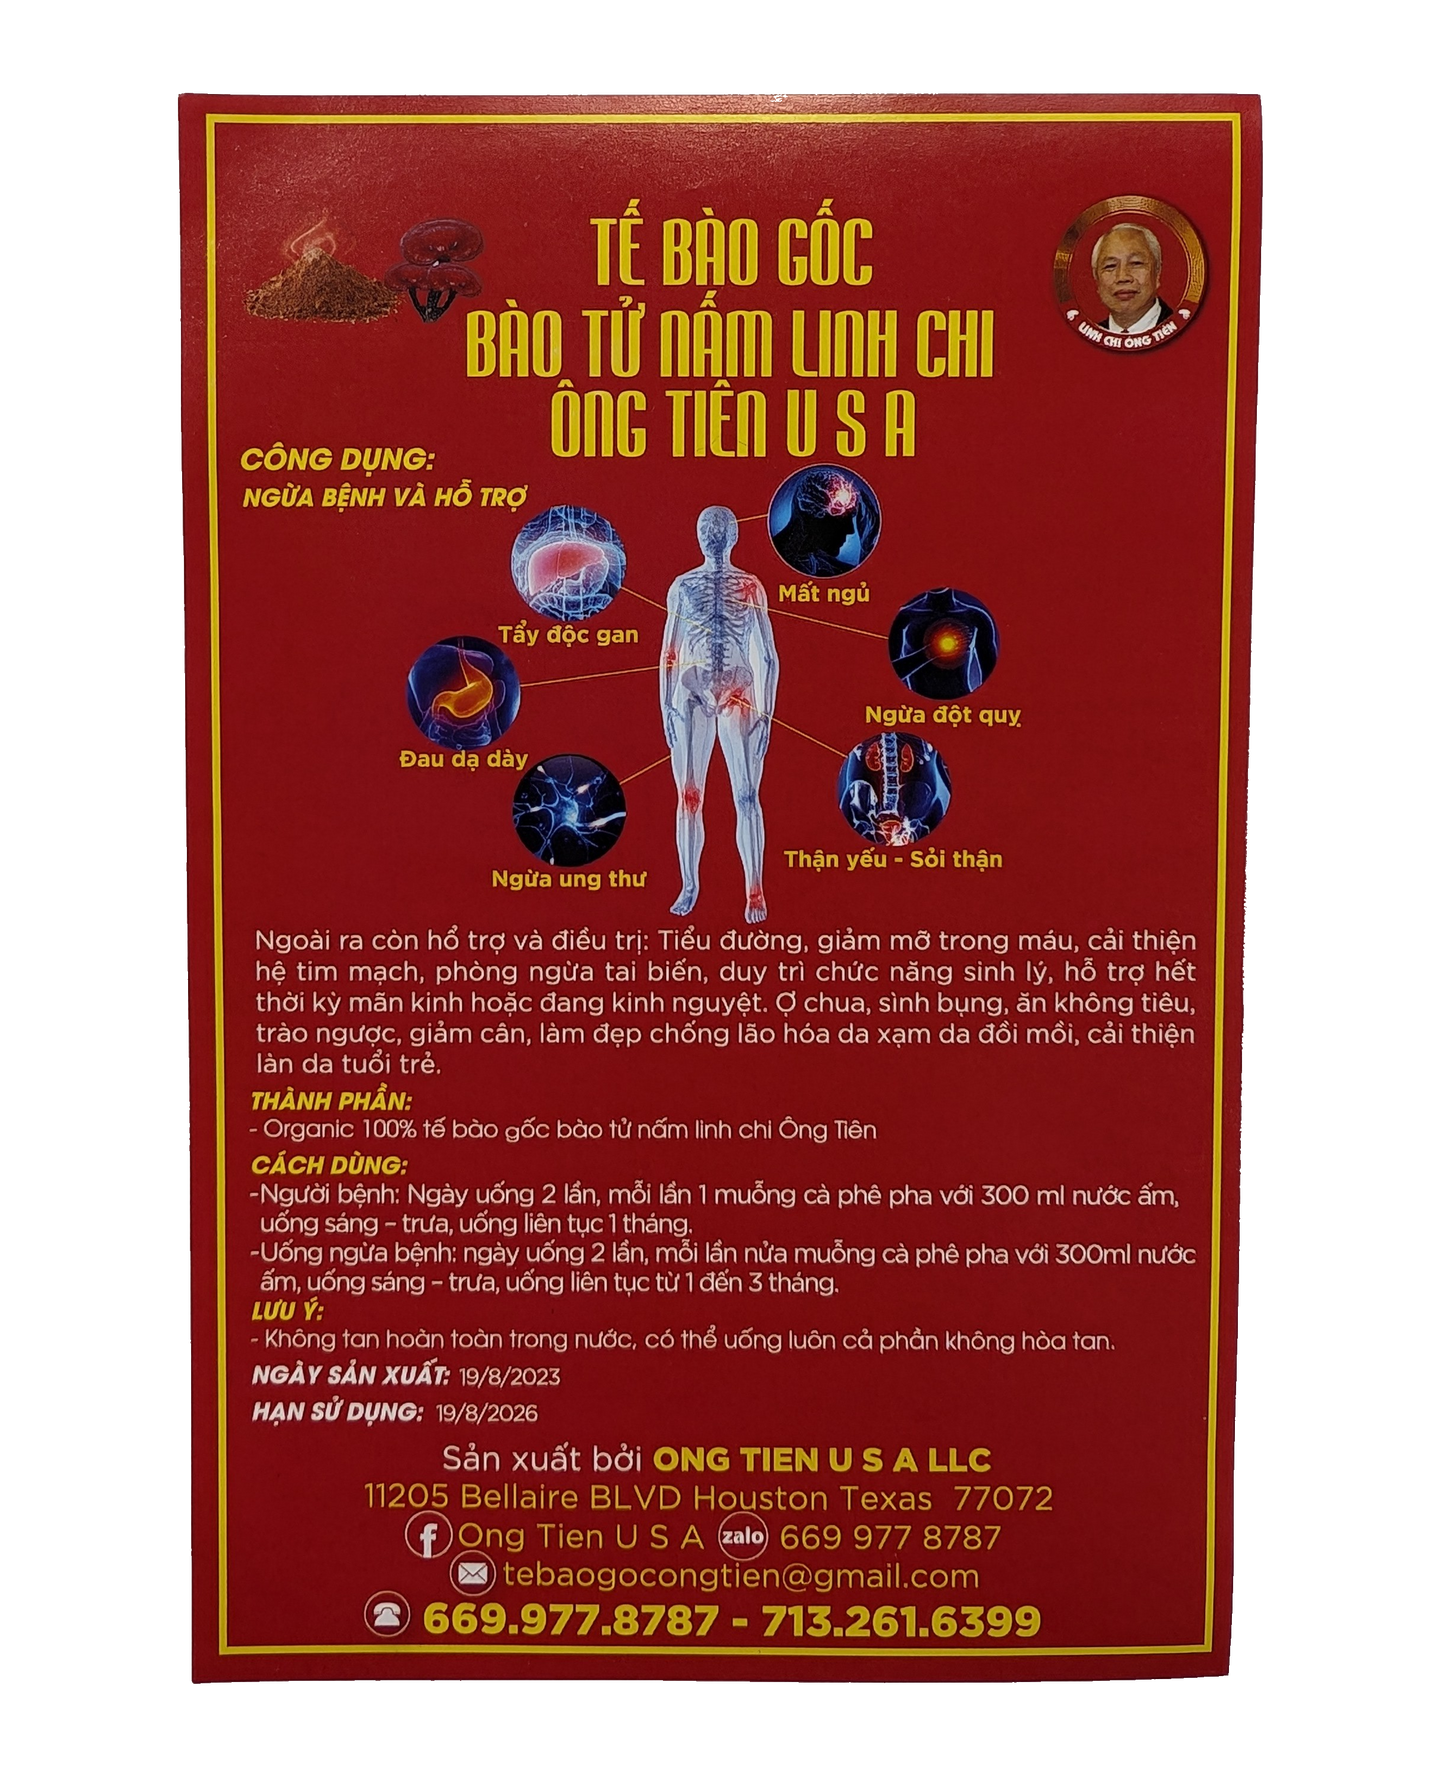 Te Bao Goc Bao Tu Nam Linh Chi Ong Tien